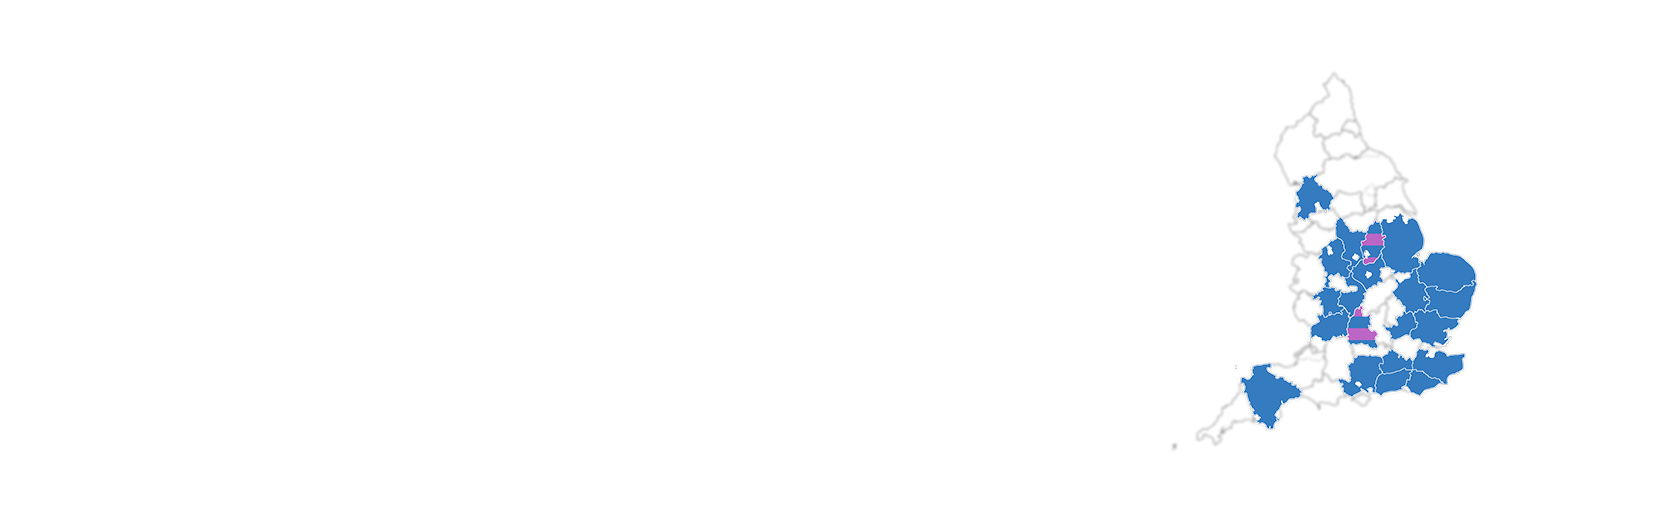 english councils